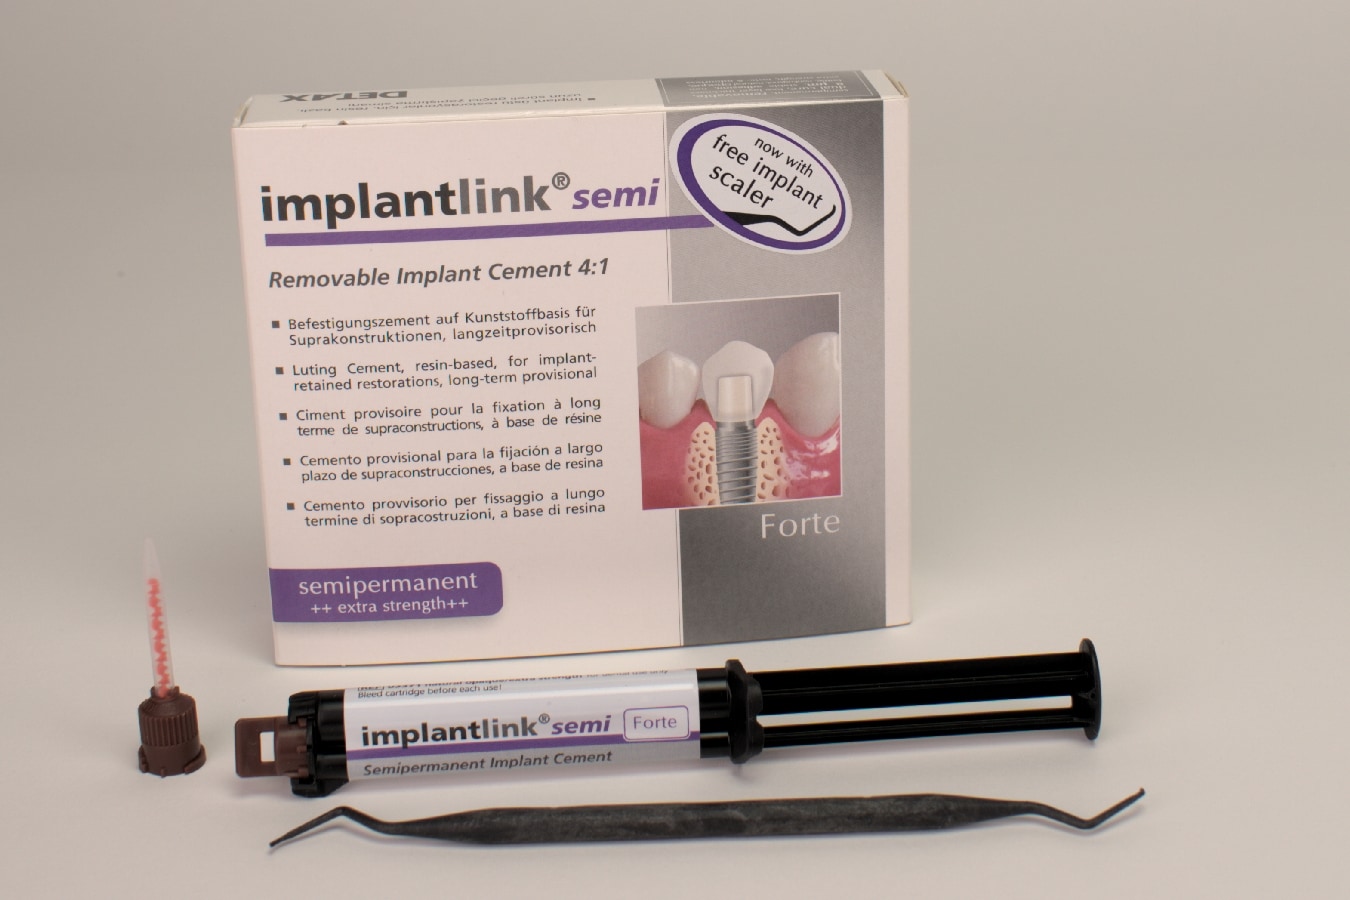 Implantlink Semi Forte Intro